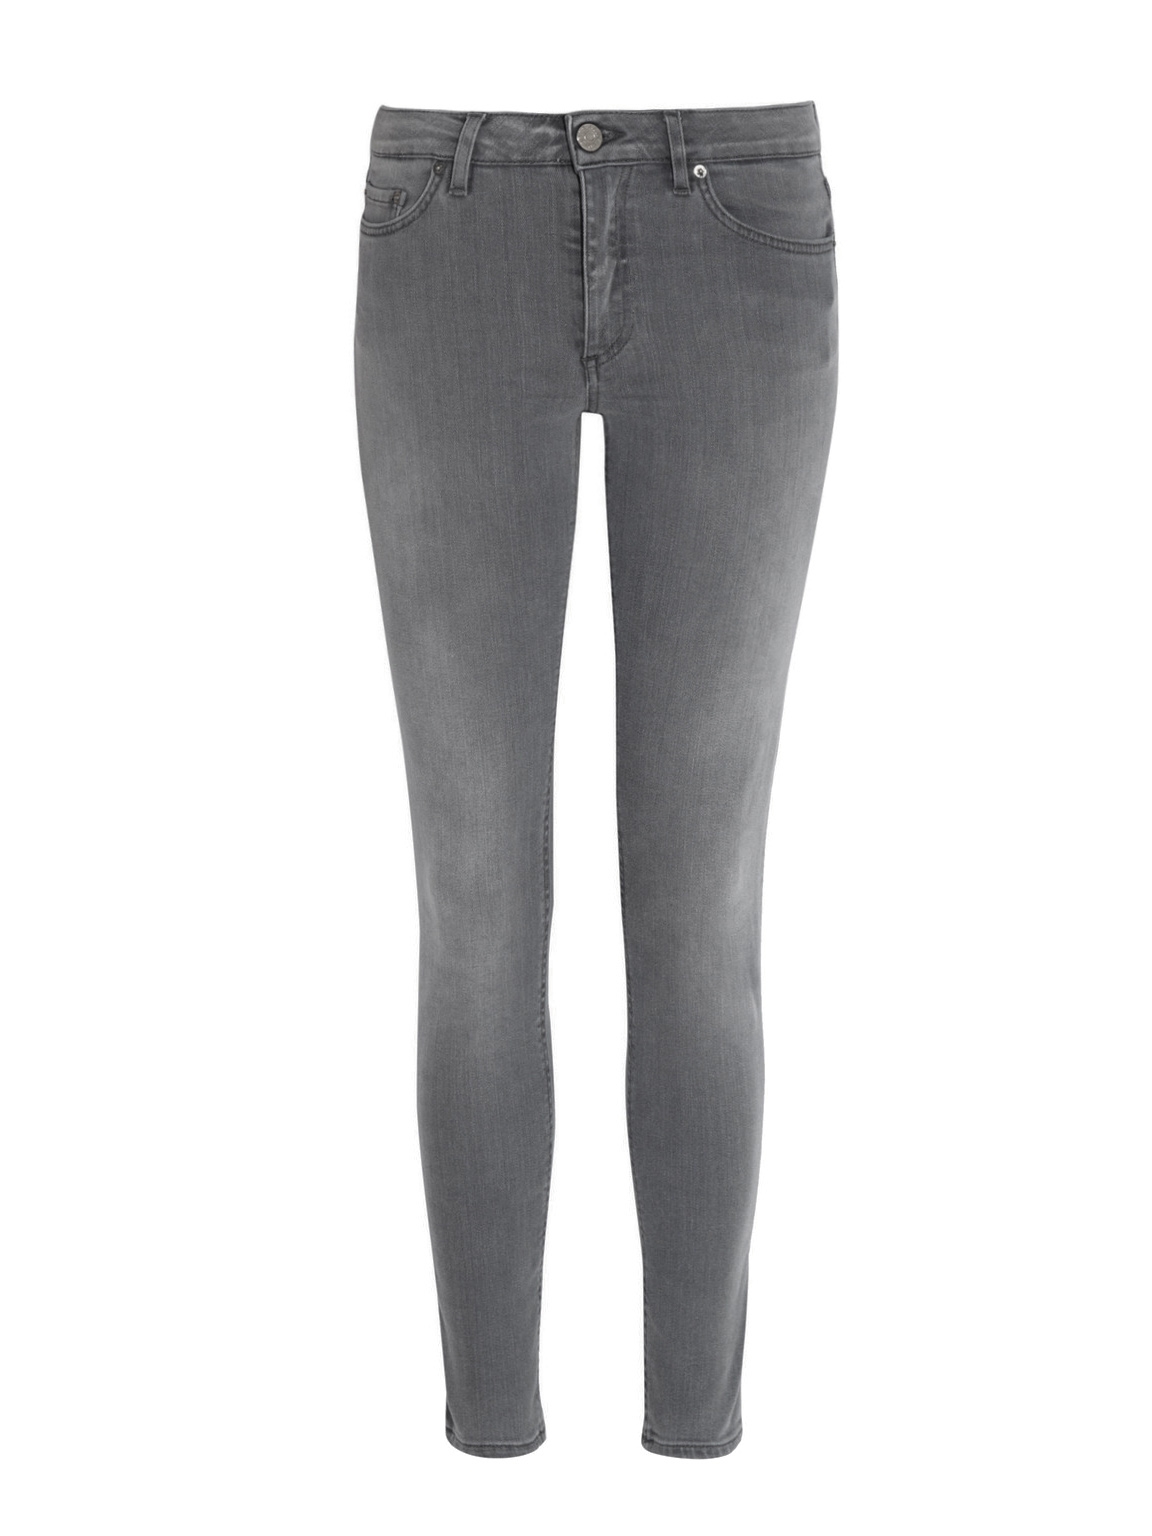 Boutique ACNE STUDIOS SKIN 5 INOX Grey skinny jeans Retail price